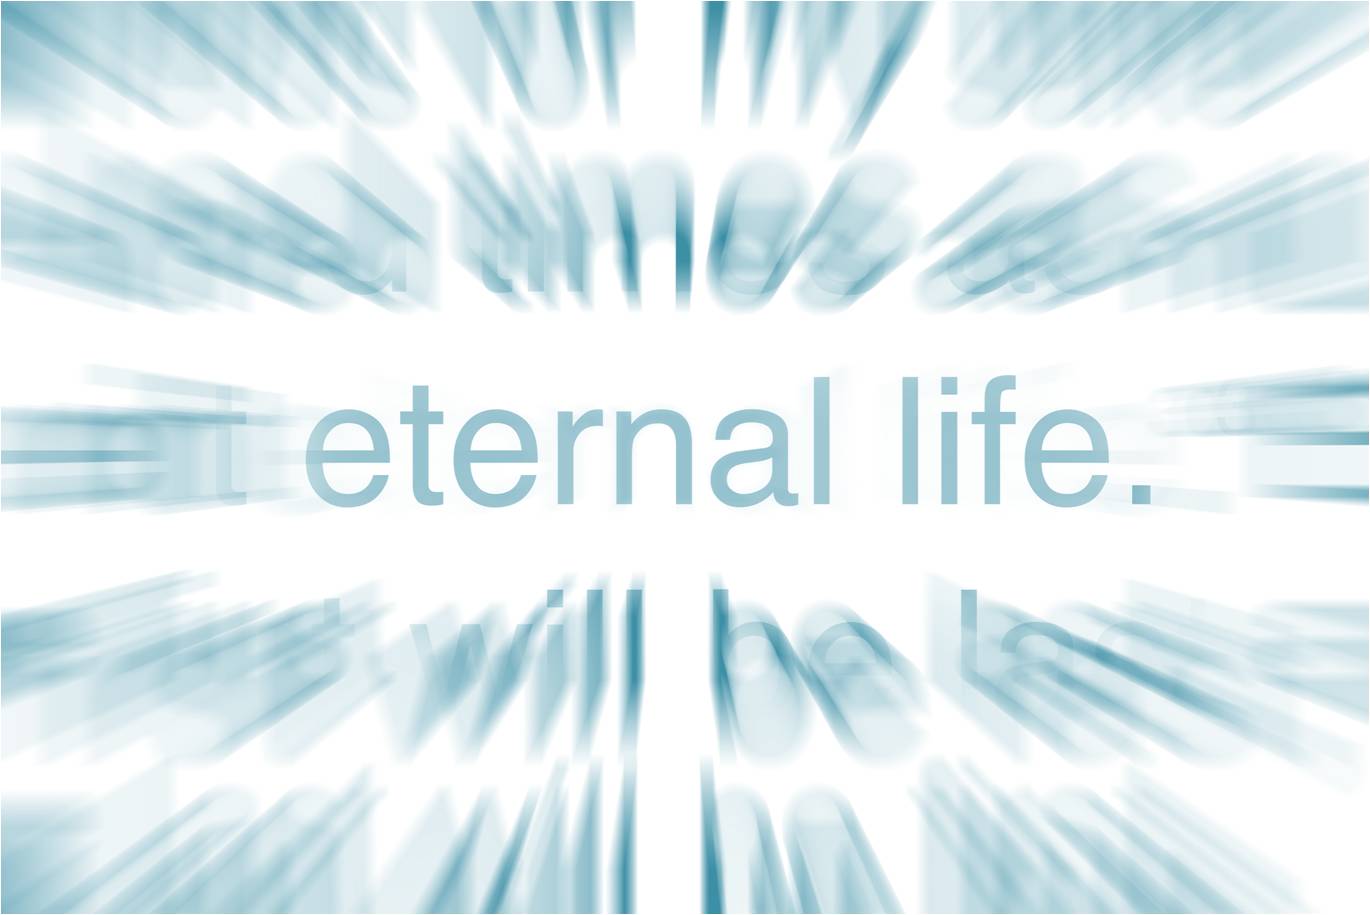 Eternal Life Bible Quotes. QuotesGram